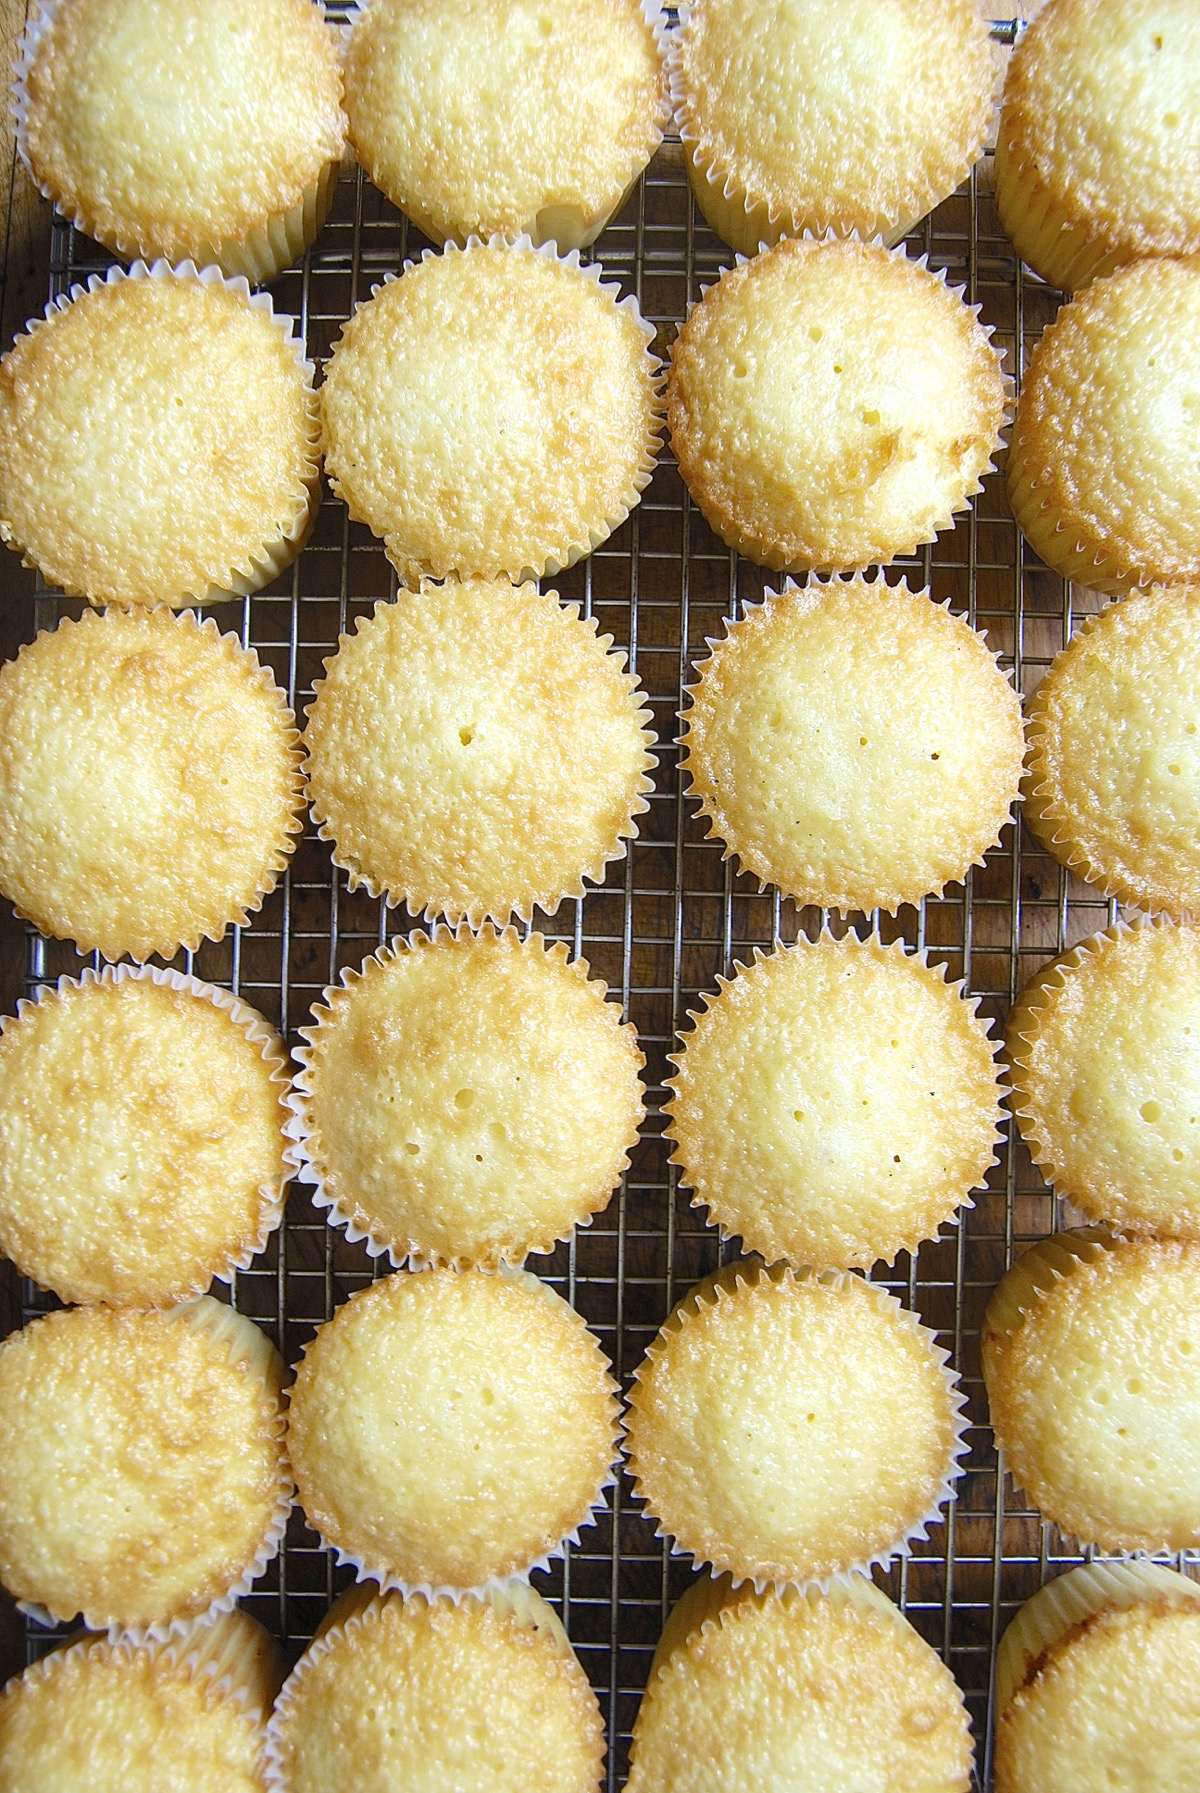 Cupcakes for Sharing via @kingarthurflour